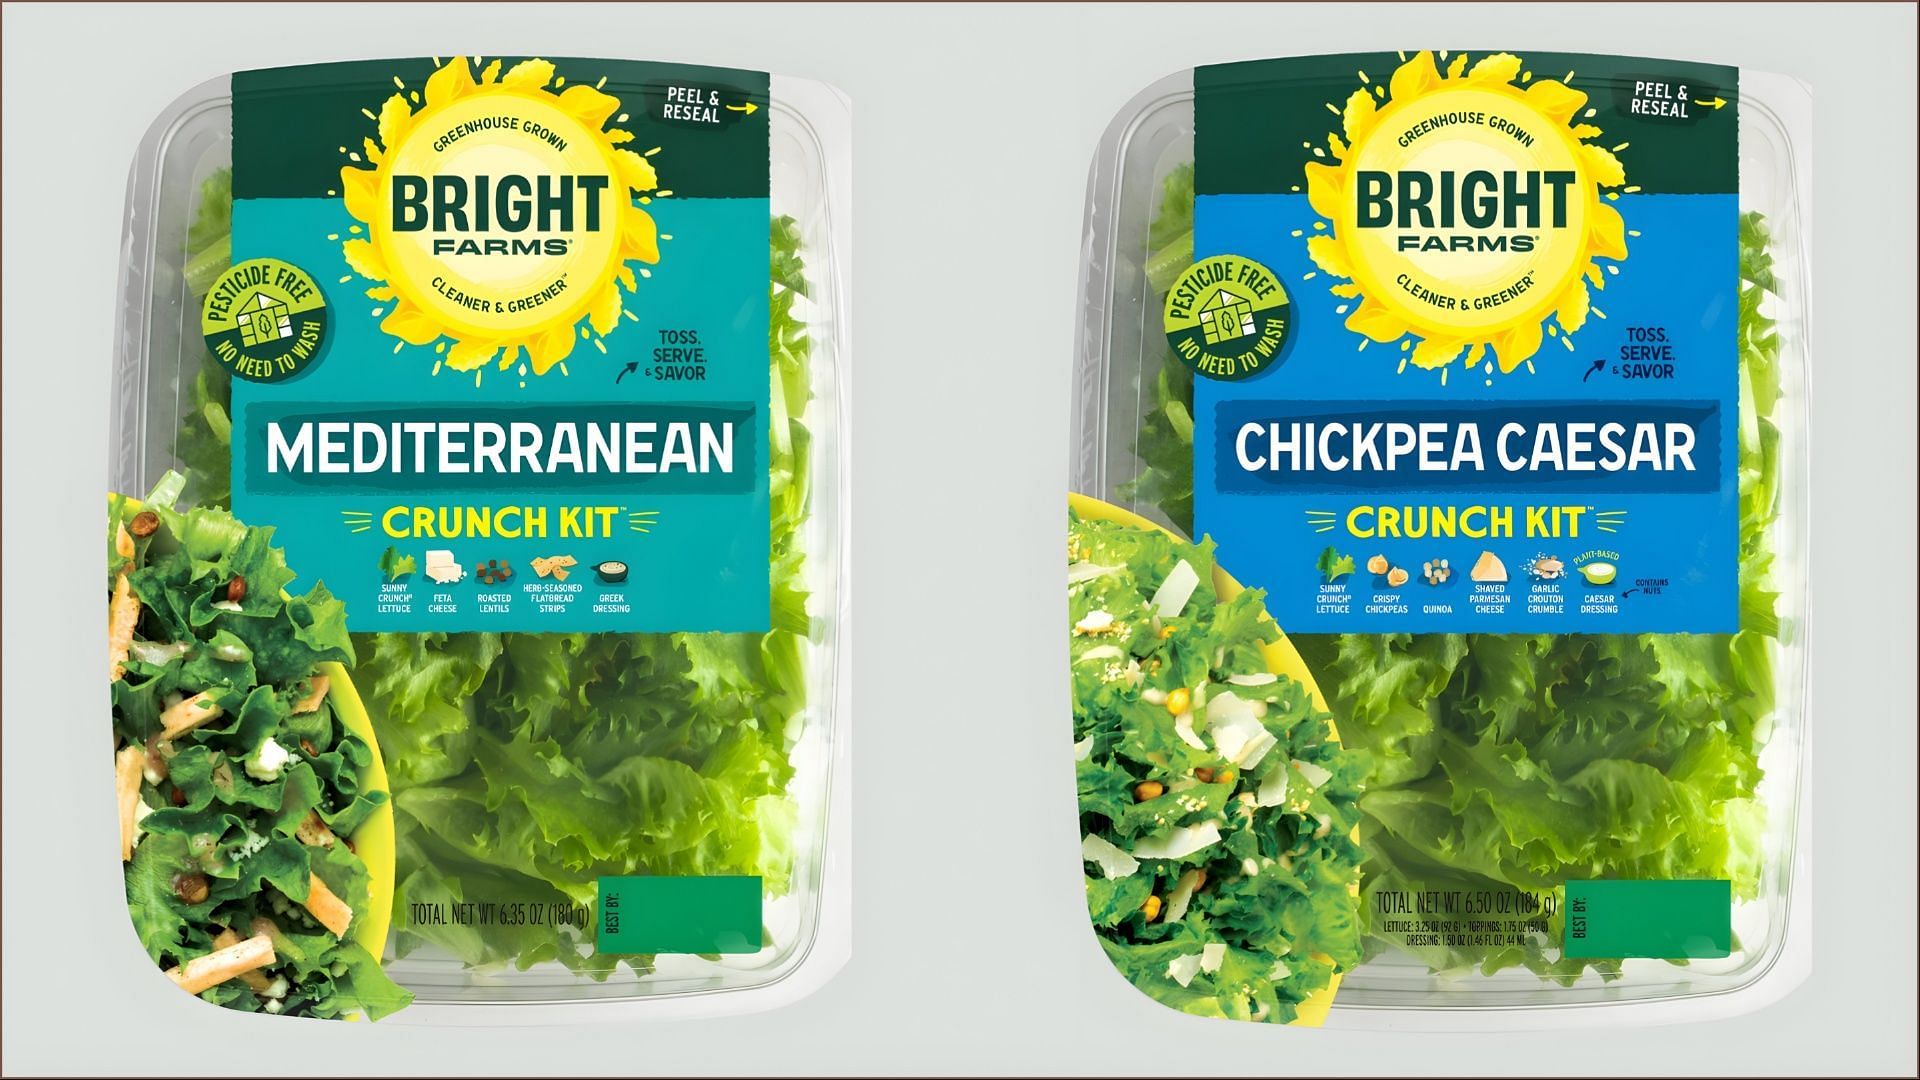 BrightFarms recalls spinach and salad kits over Listeria contamination concerns (Image via FDA)